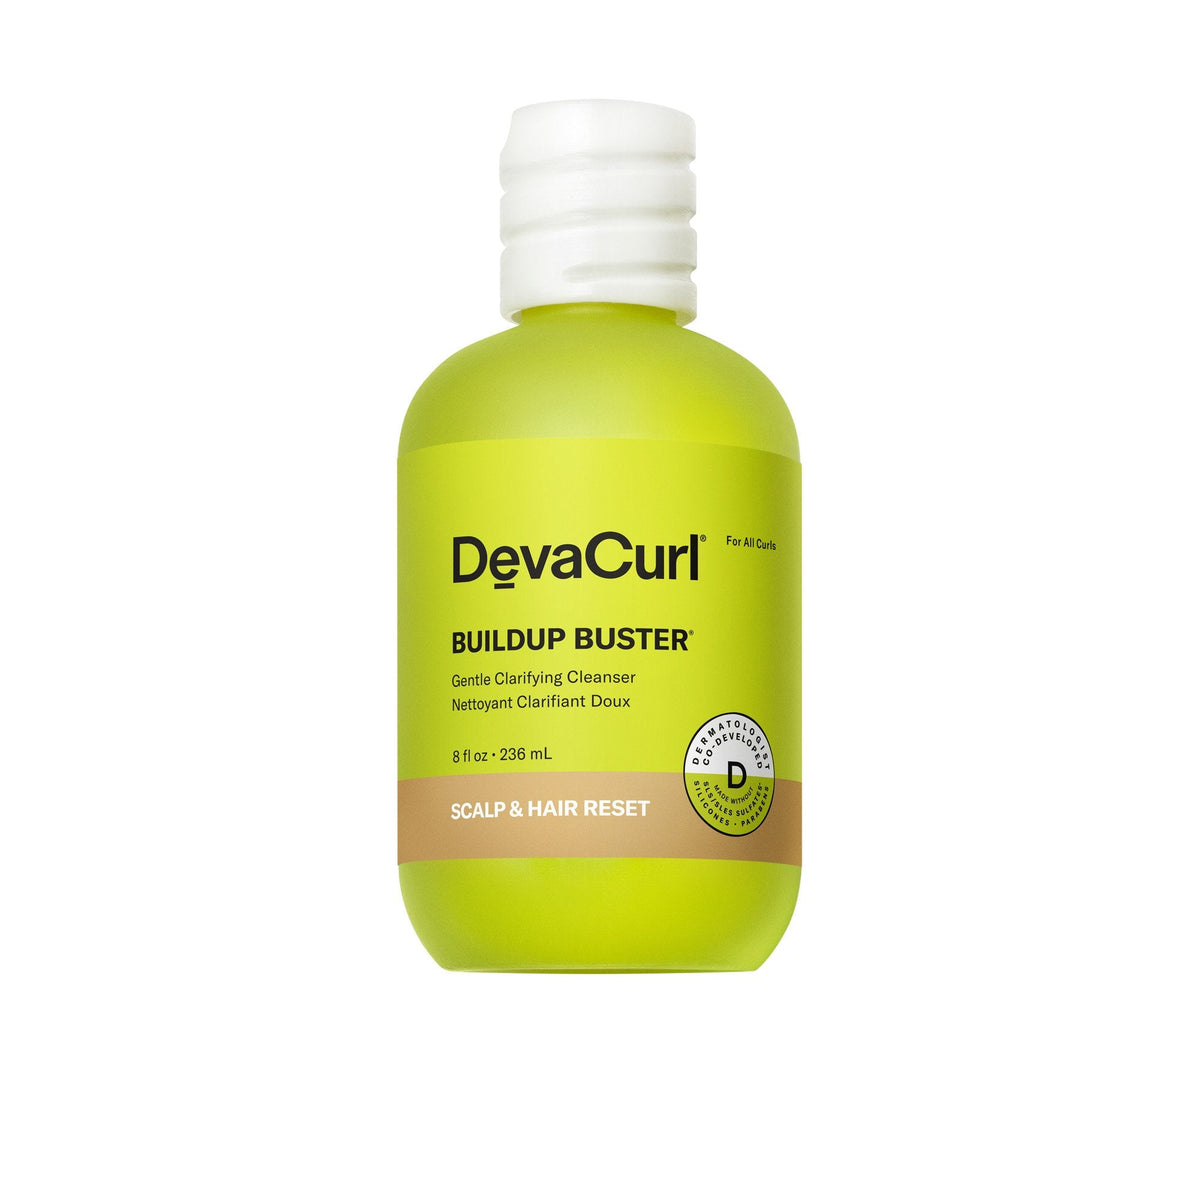 New! DevaCurl Buildup Buster - 8oz - by Deva Curl |ProCare Outlet|